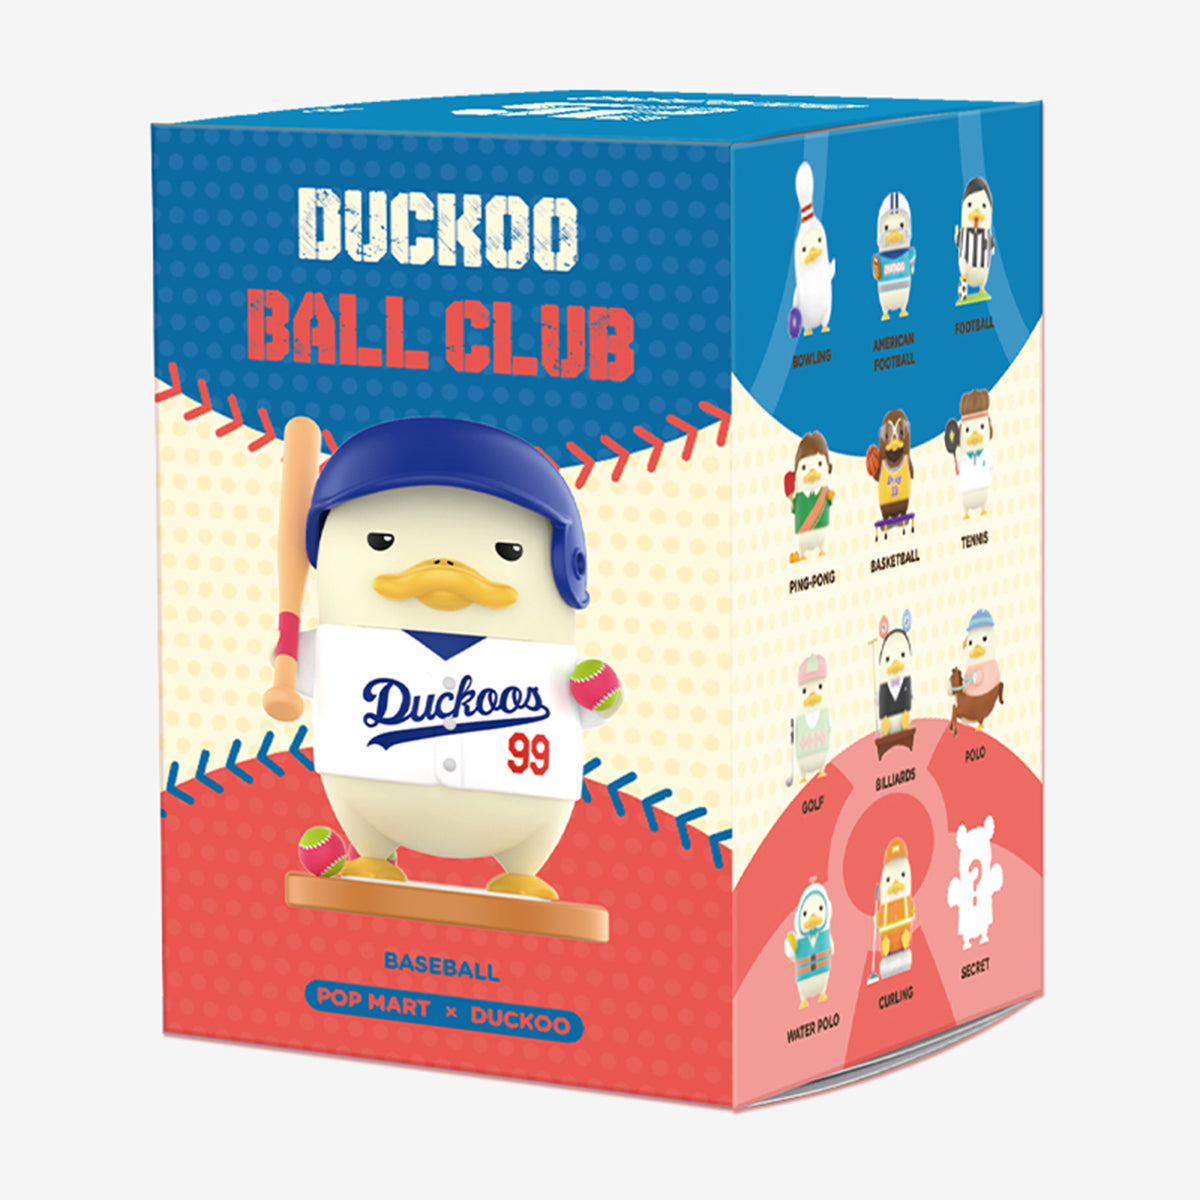 Popmart DUCKOO BALL CLUB Series (BLIND BOX)